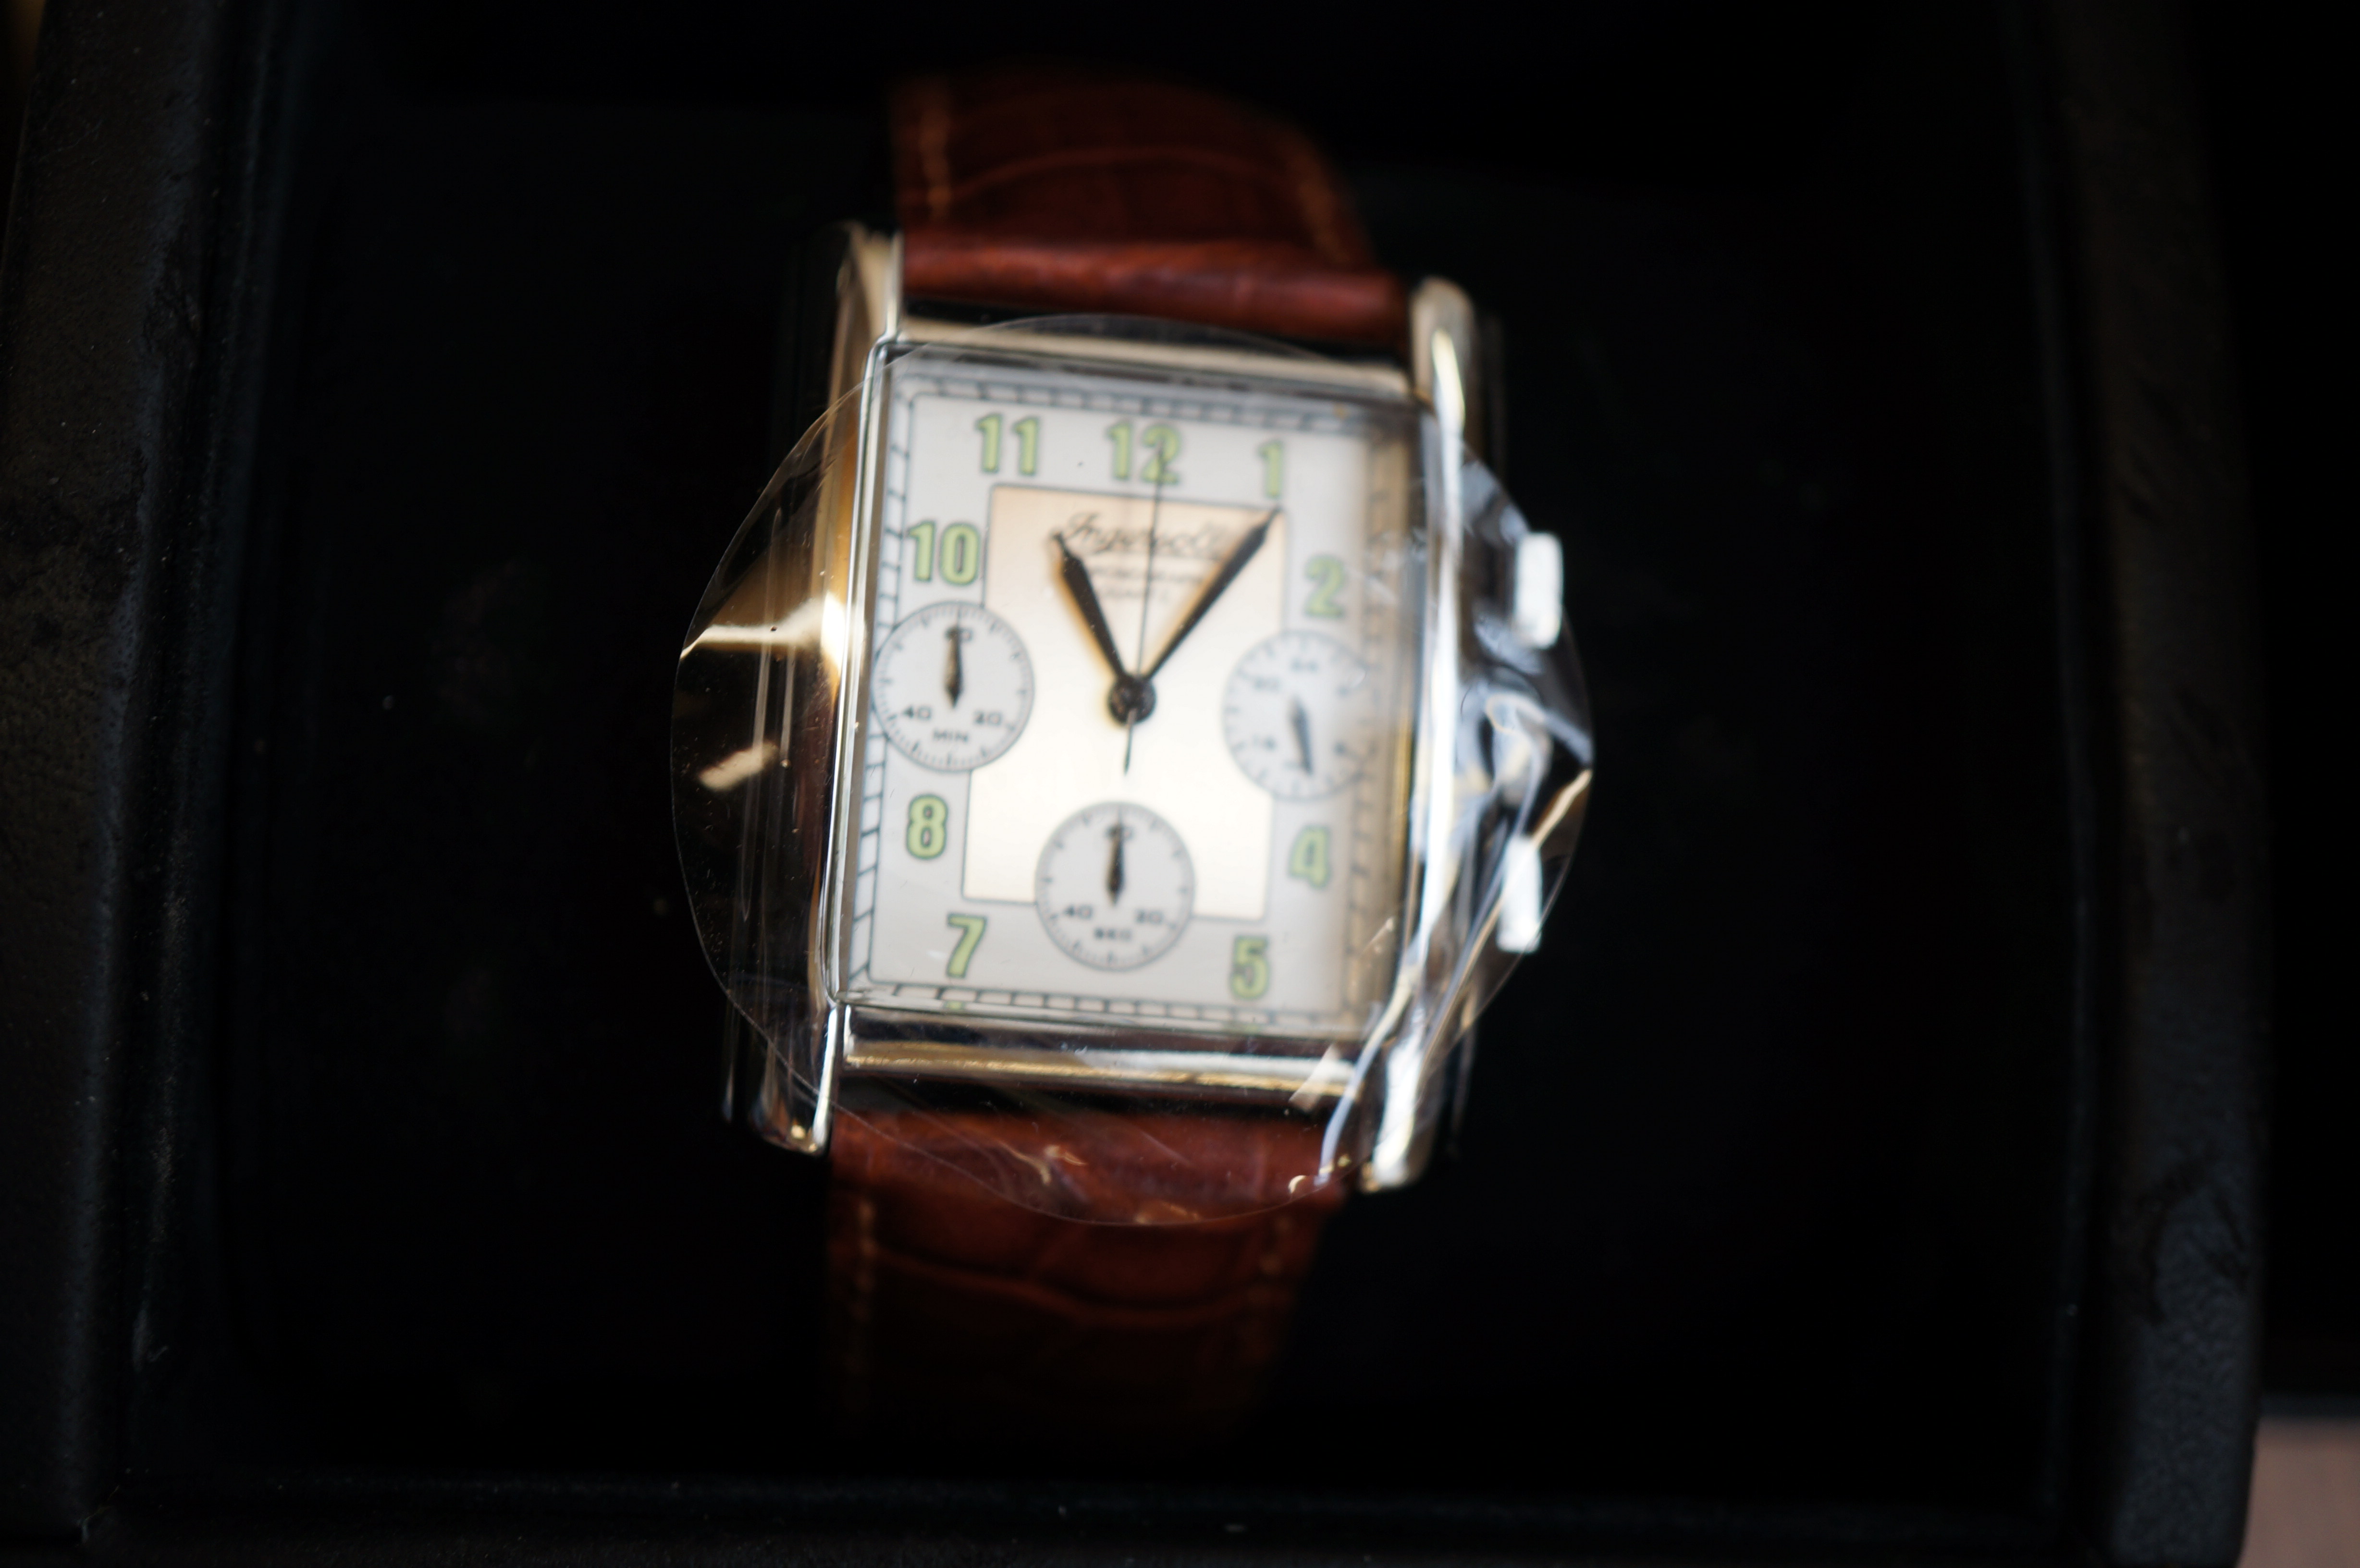 Gents Ingersoll chronograph wristwatch